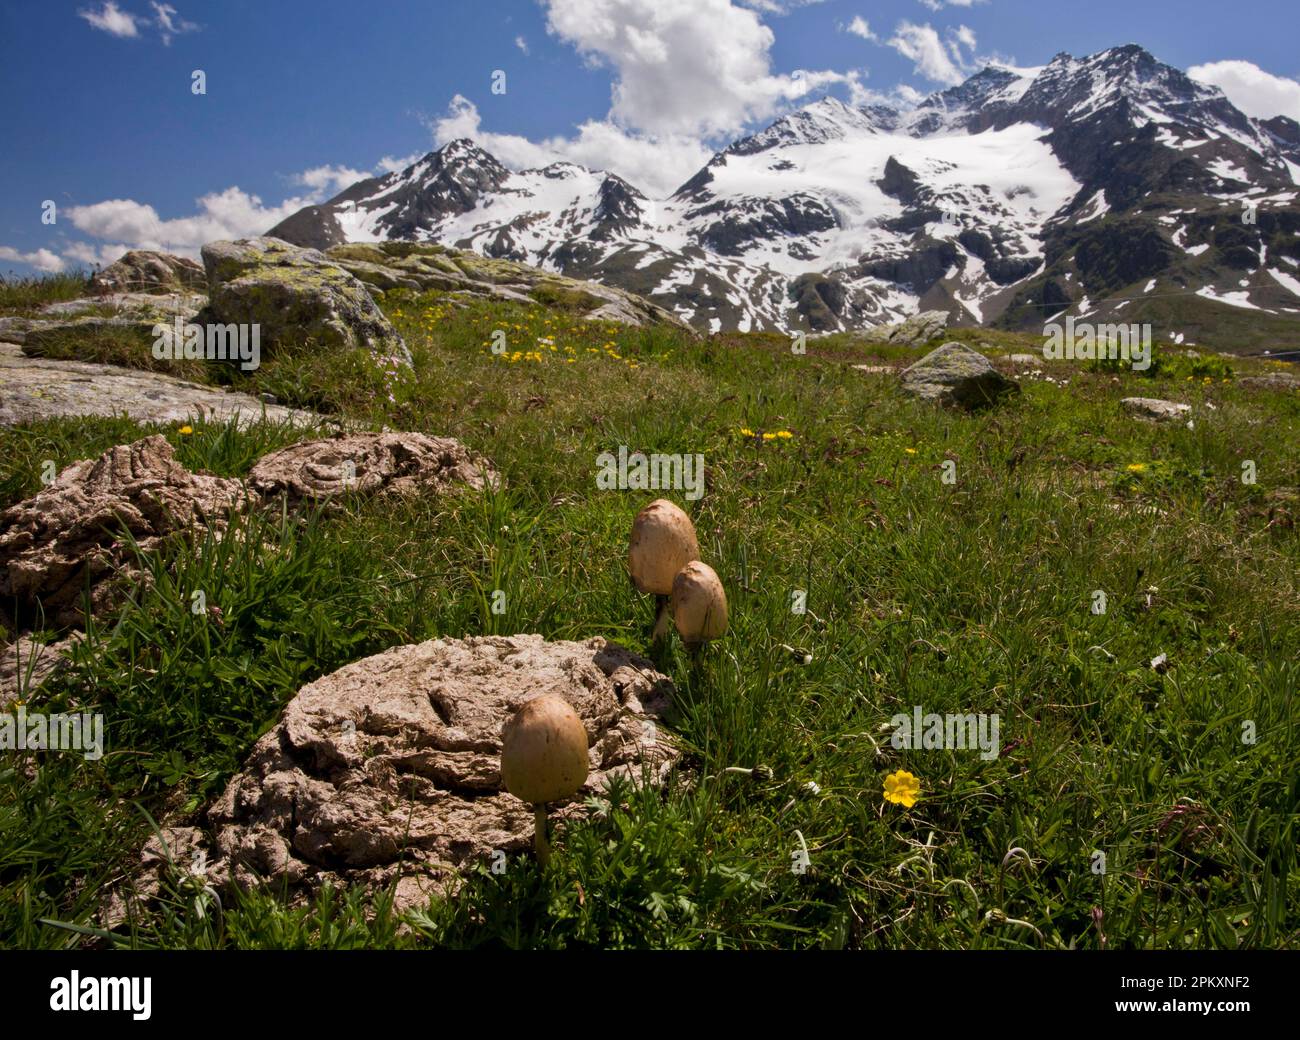 Egghead shiny mottlegill (Panaeolus semiovatus) fruiting body, growing on cattle dung at high altitude, Bernina Pass, Swiss Alps, Switzerland Stock Photo